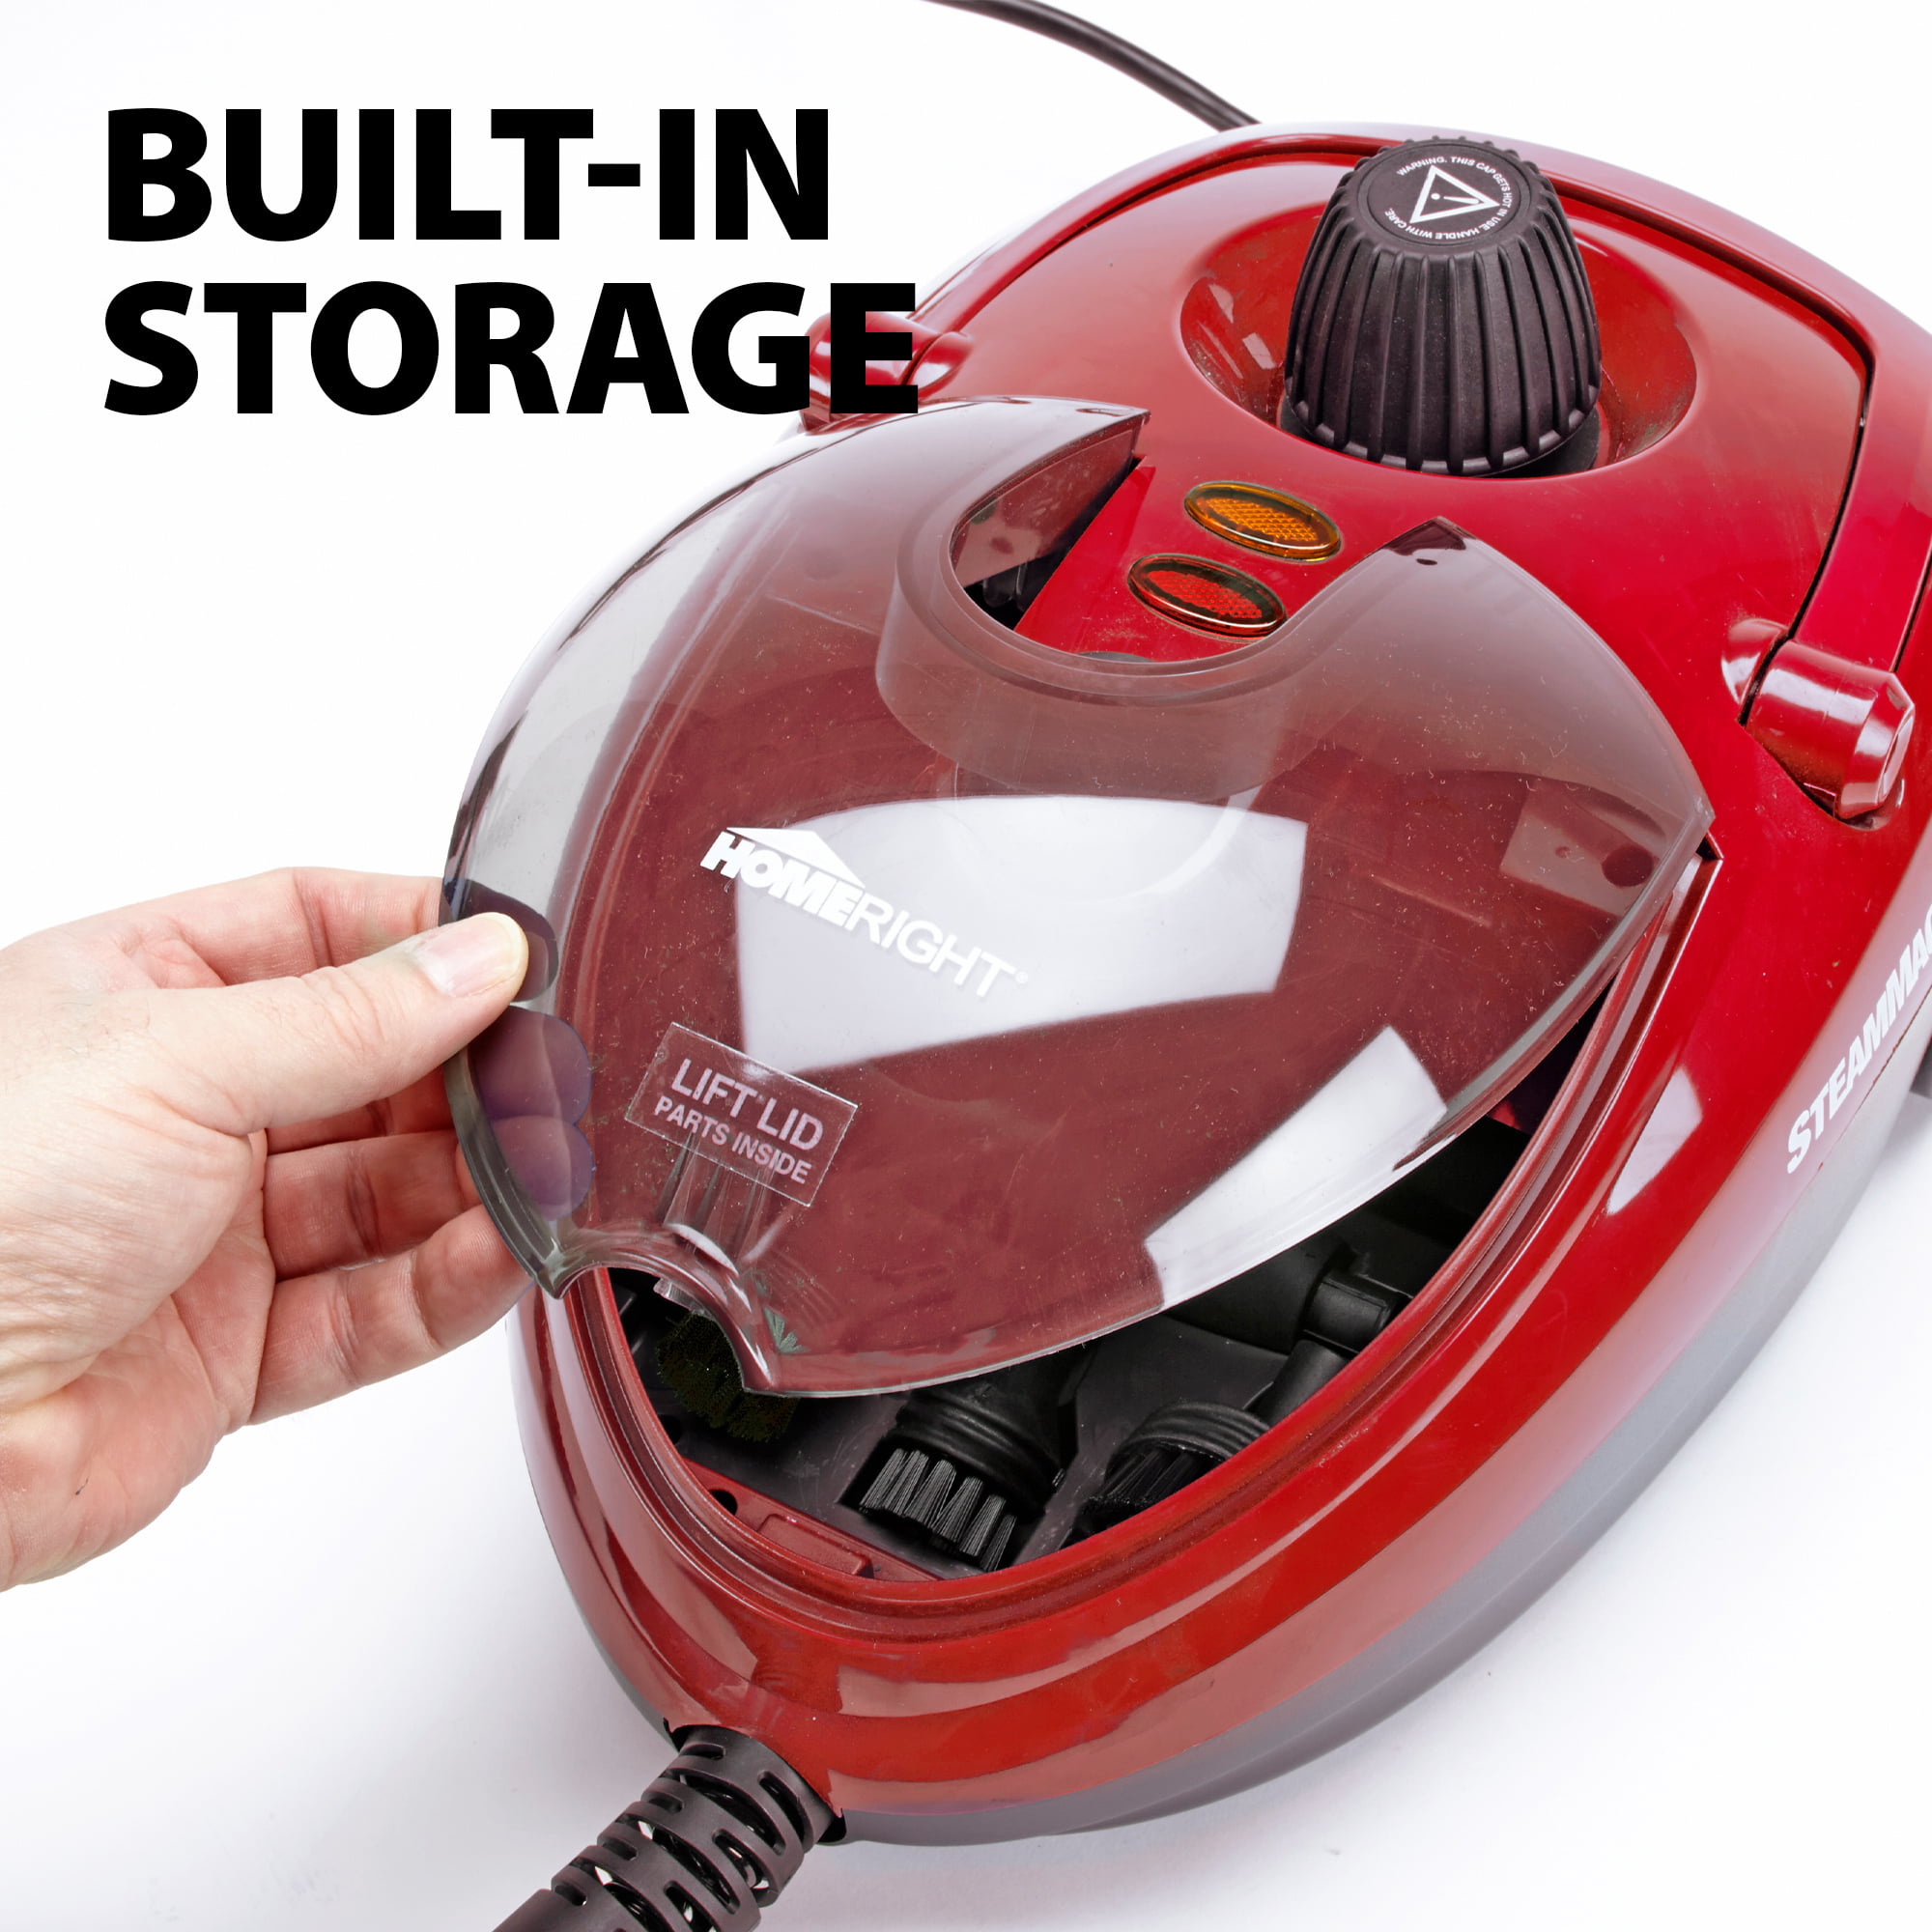 Autoright C900054.M Multi Purpose Steam Cleaner Red for sale online 